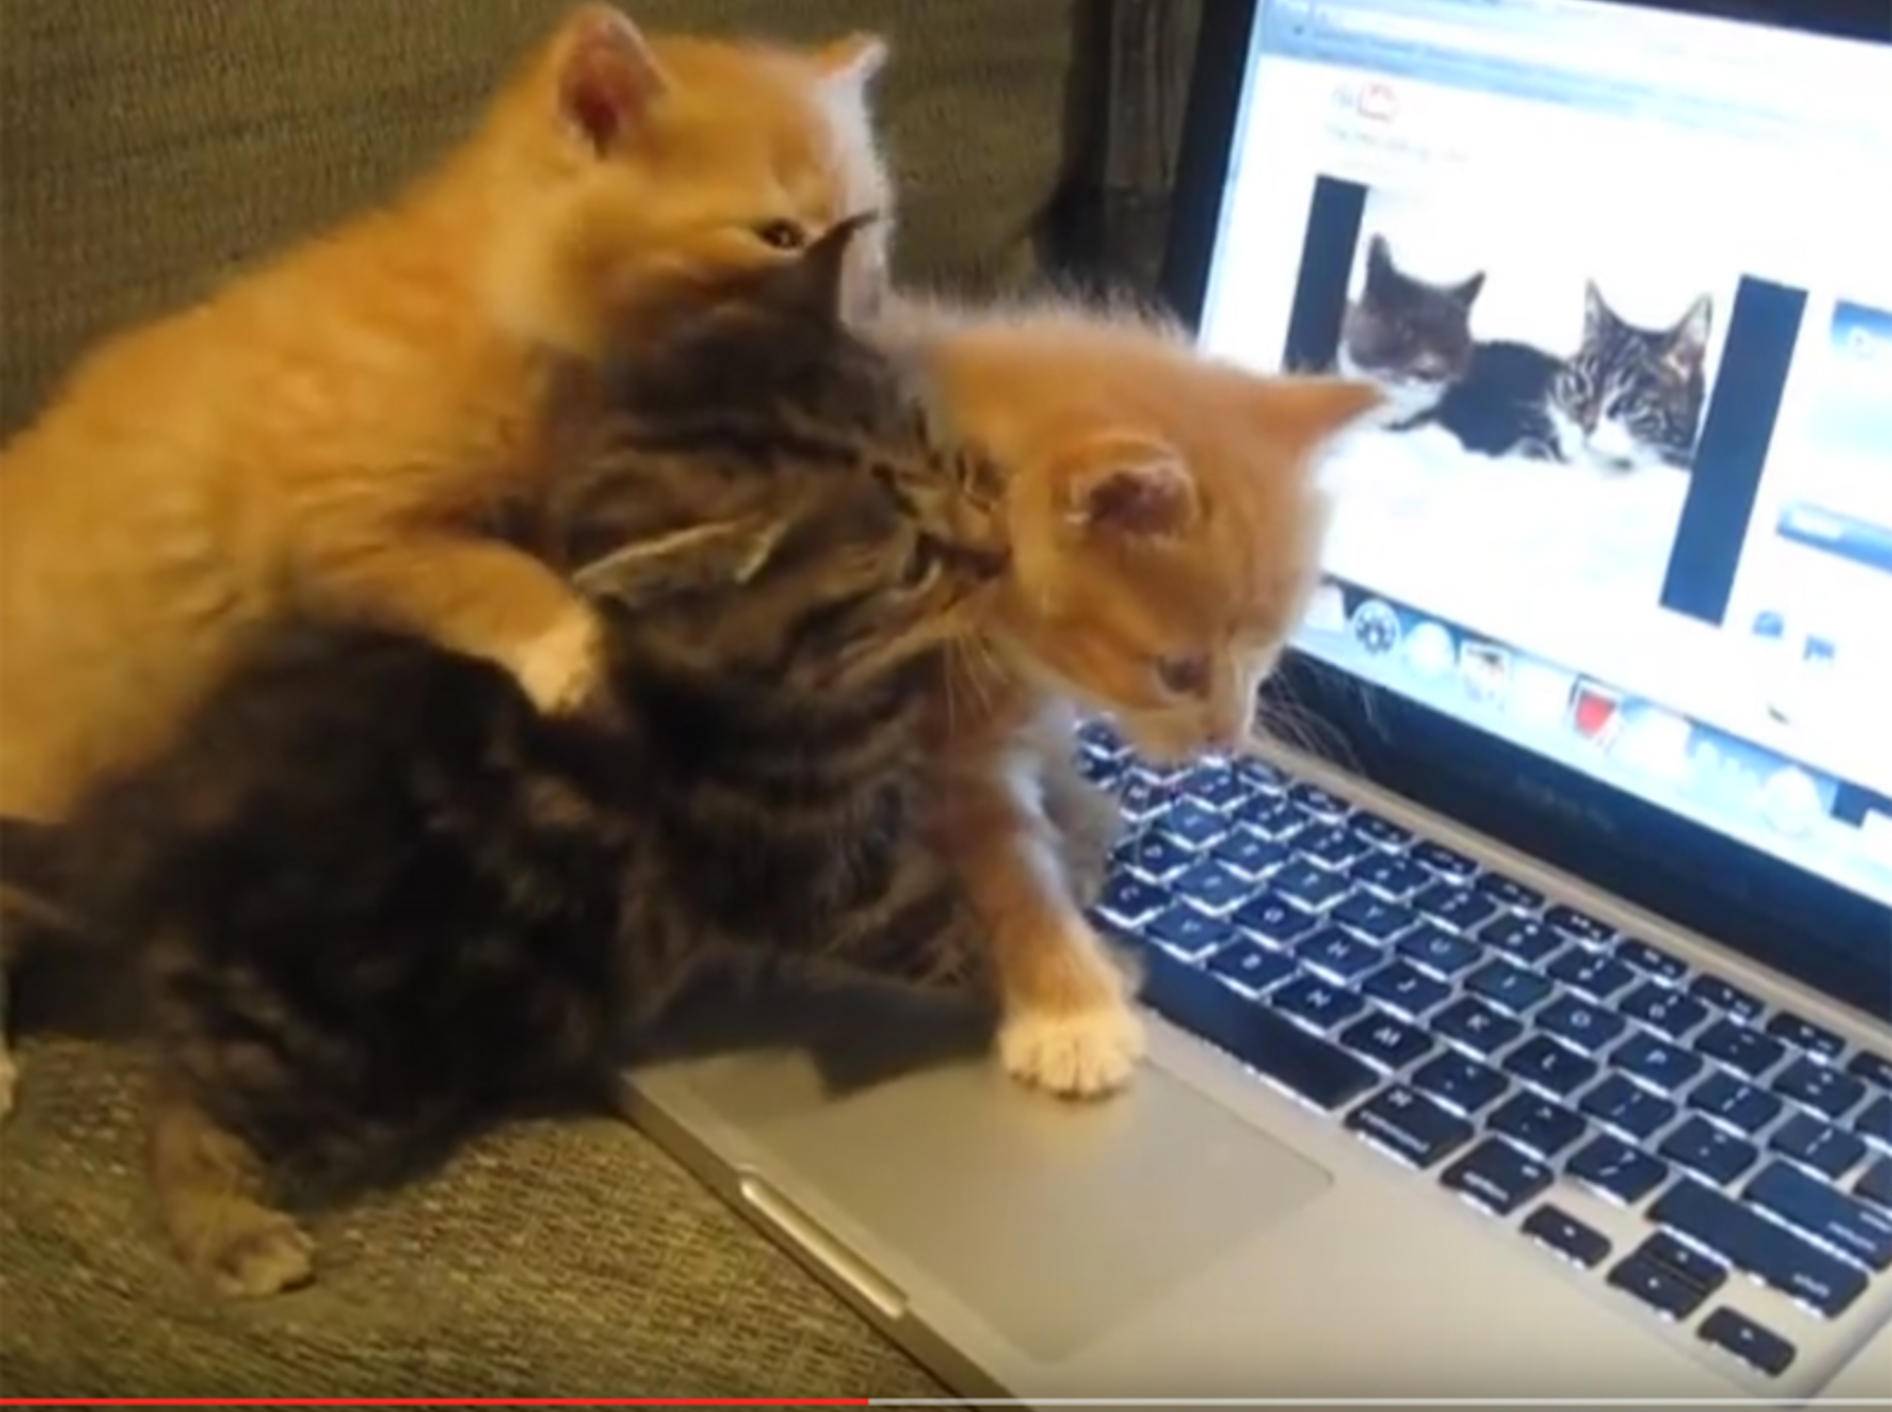 Redselige Katzenbabys fasziniert von Katzenvideo – YouTube / Madeline Ann Sophia